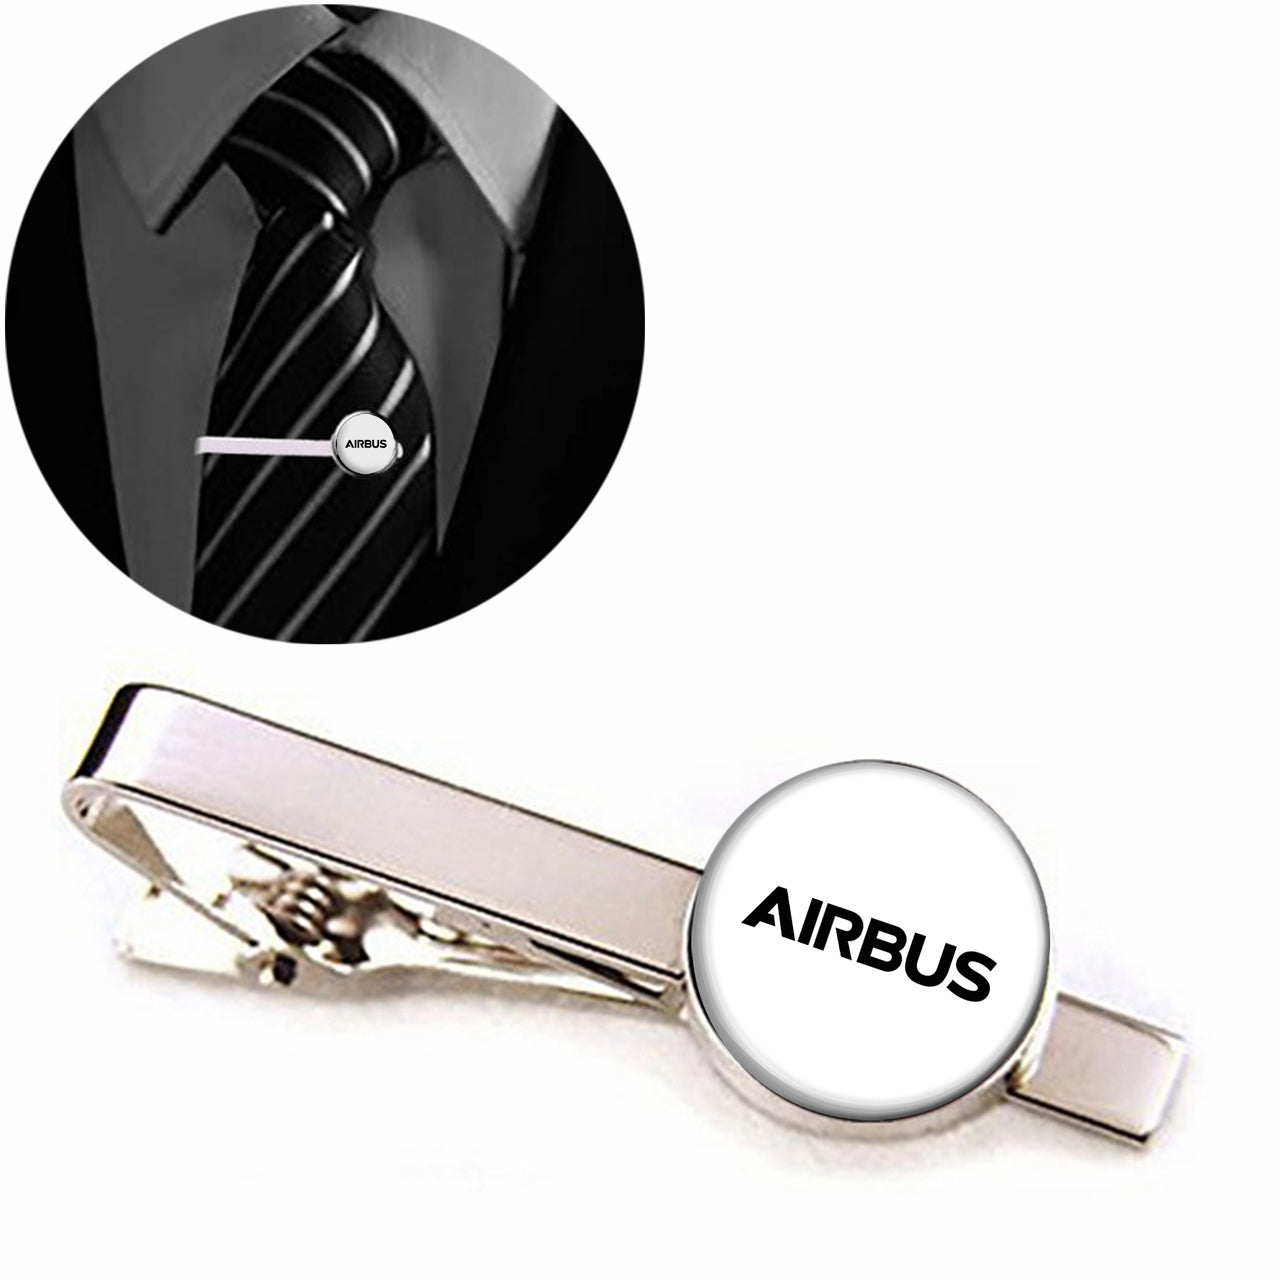 Airbus & Text Designed Tie Clips